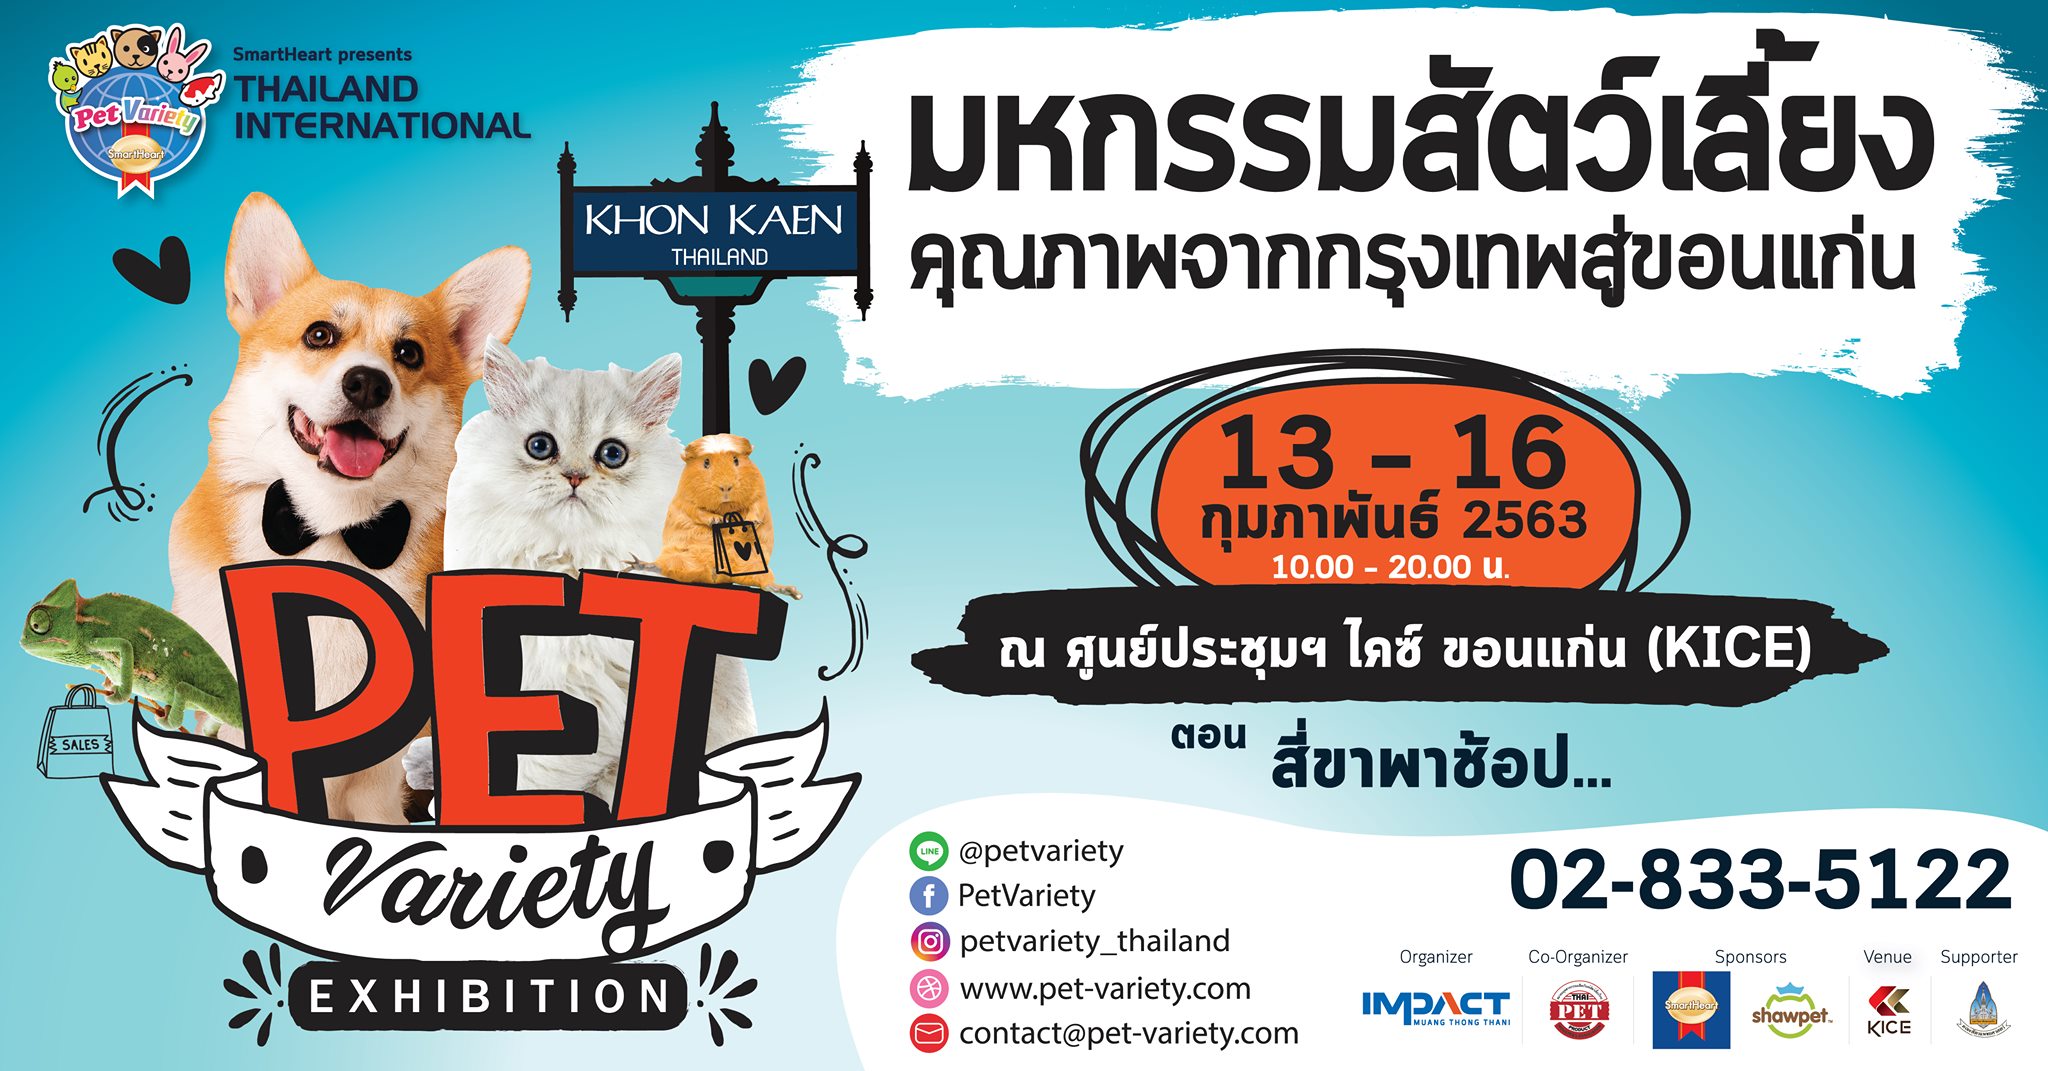 Smartheart Presents Thailand International Pet Variety Exhibition ครั้งที่ 9 ตอน สี่ขาพาช้อป